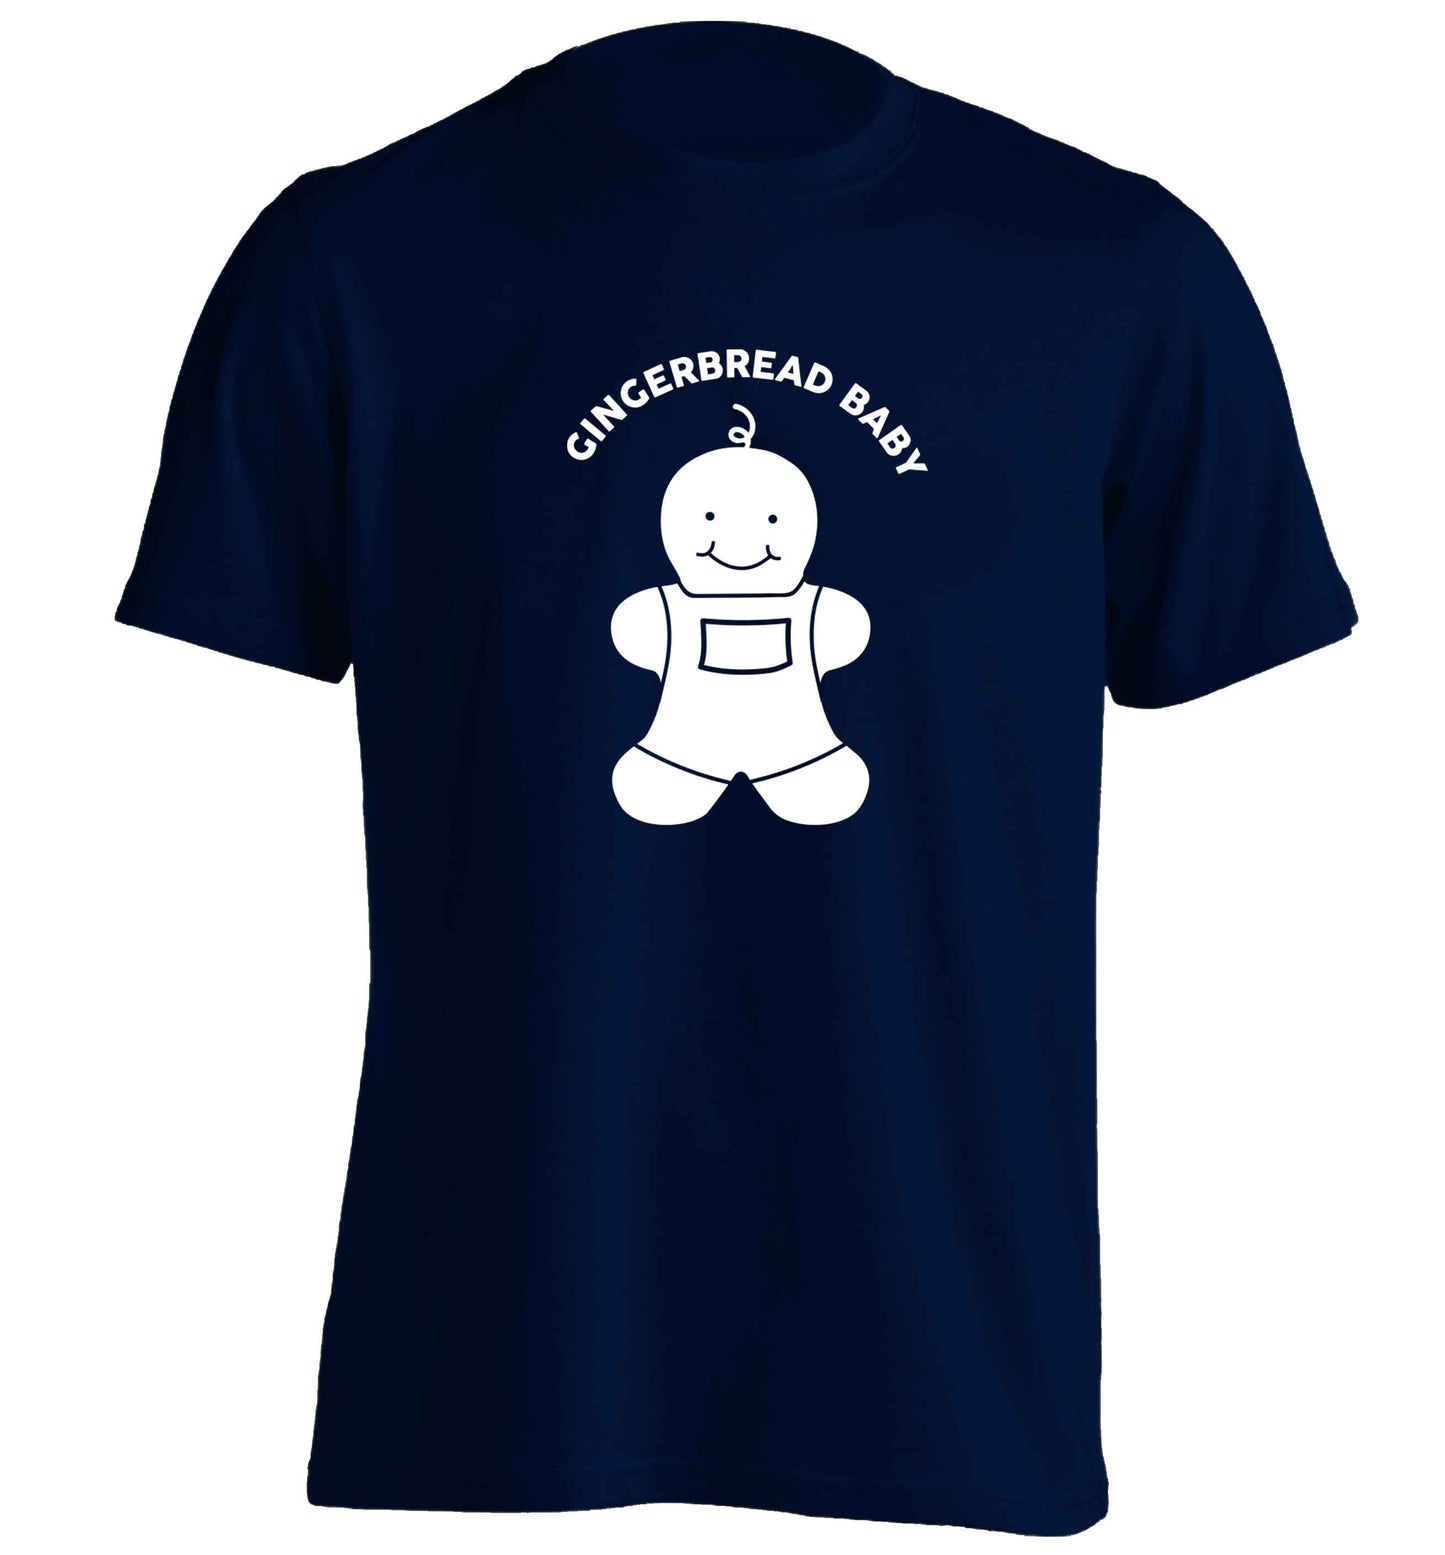 Gingerbread baby adults unisex navy Tshirt 2XL